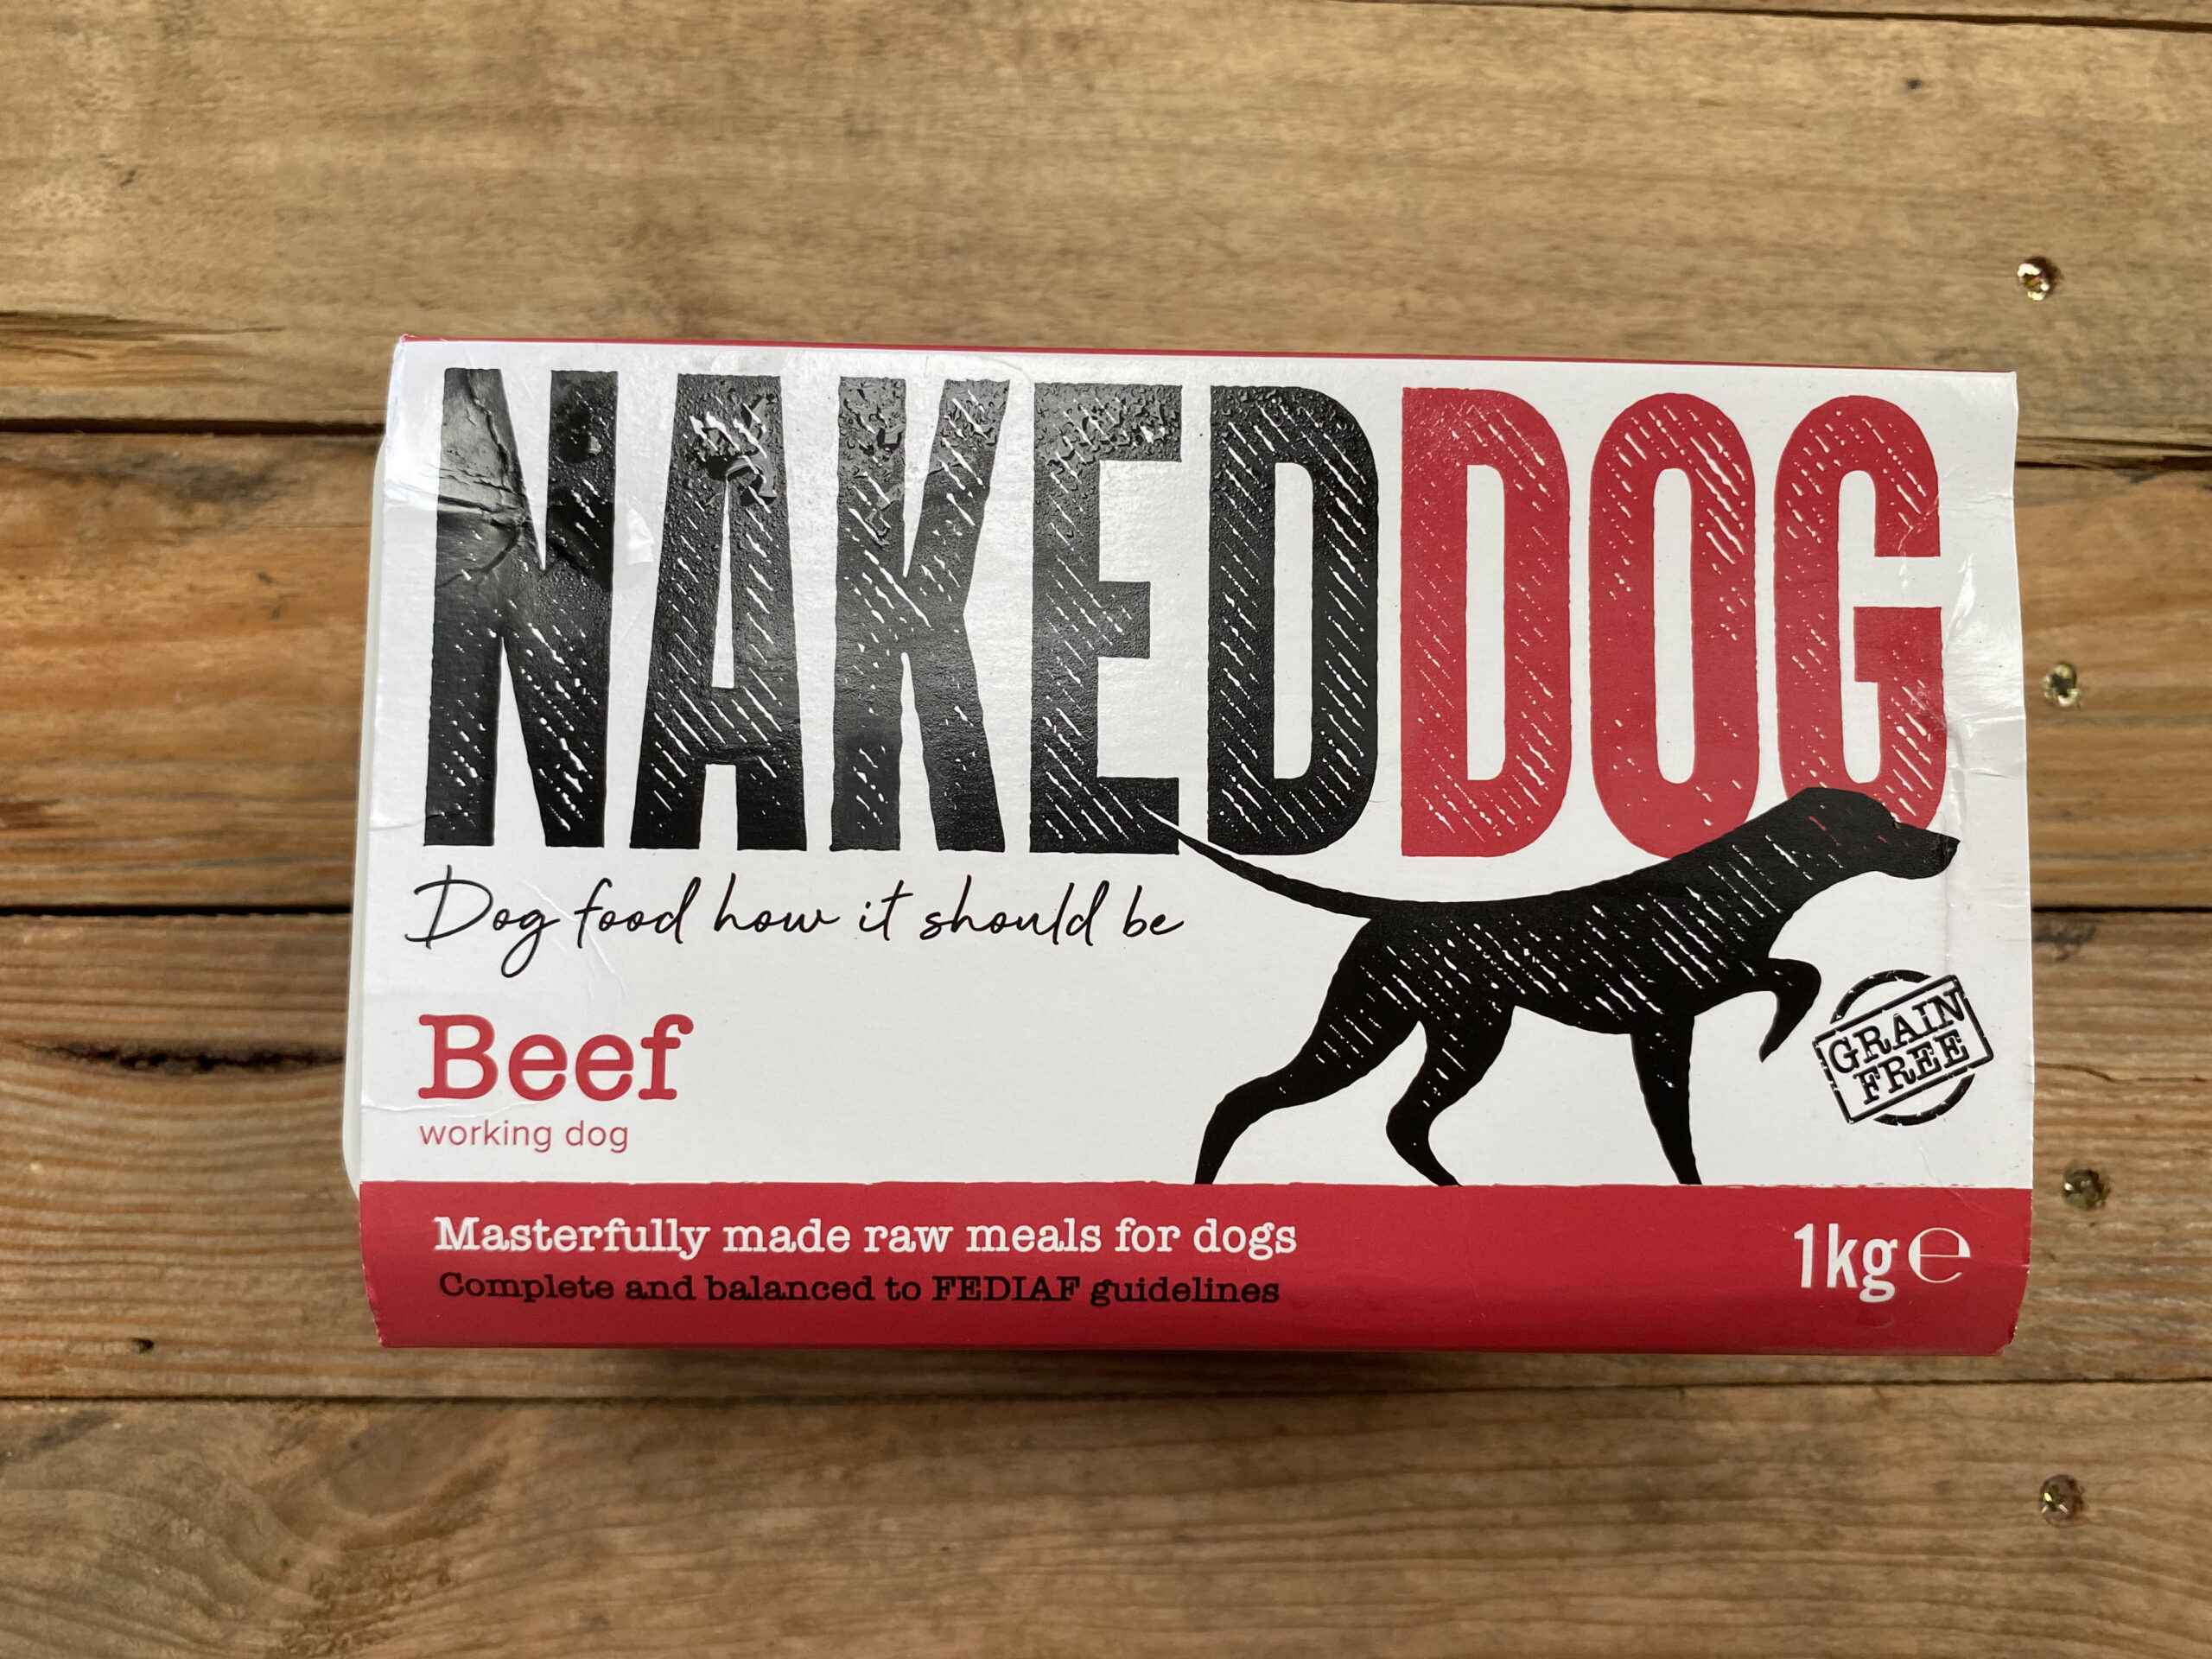 Naked Dog Working Beef – 1kg